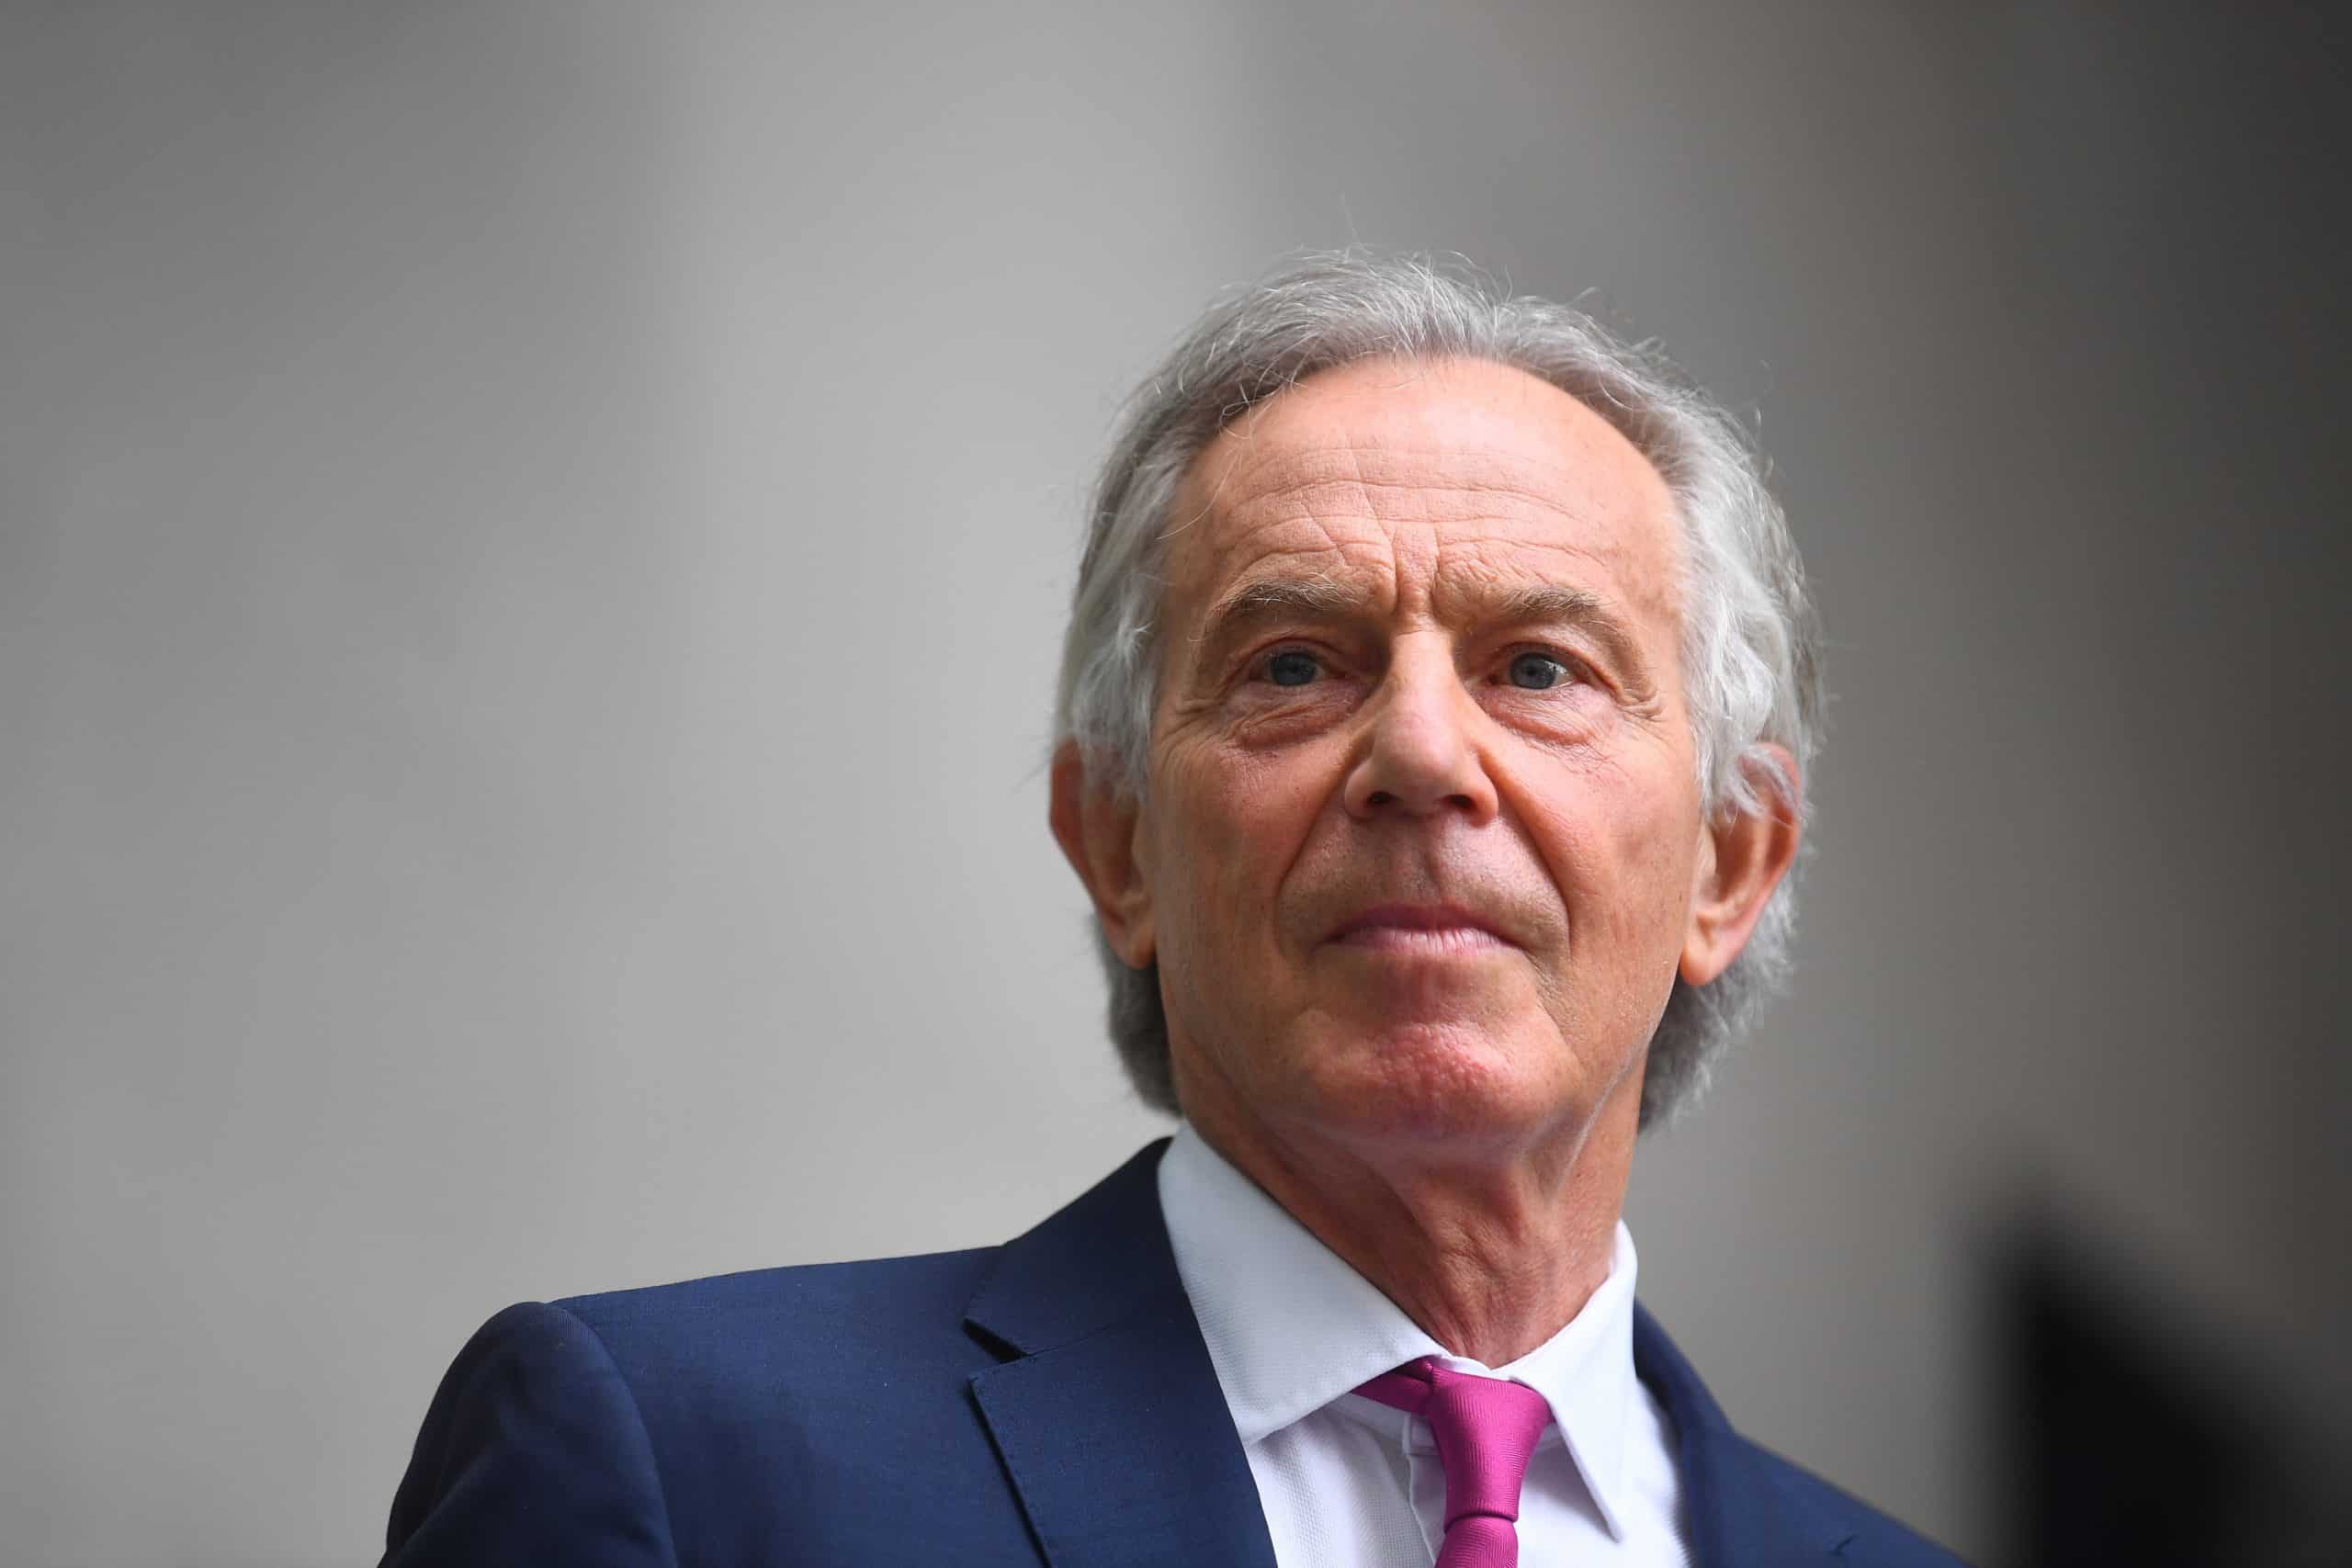 ‘Don’t support strike action’, Blair tells Starmer